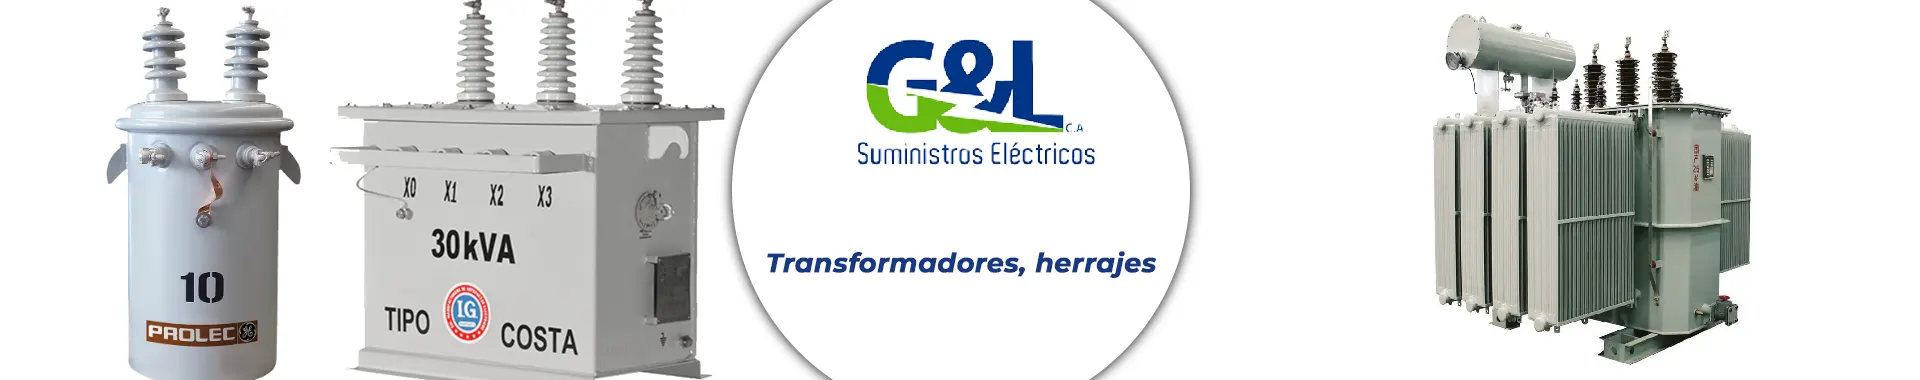 Imagen 4 del perfil de Suministros Eléctricos G&L